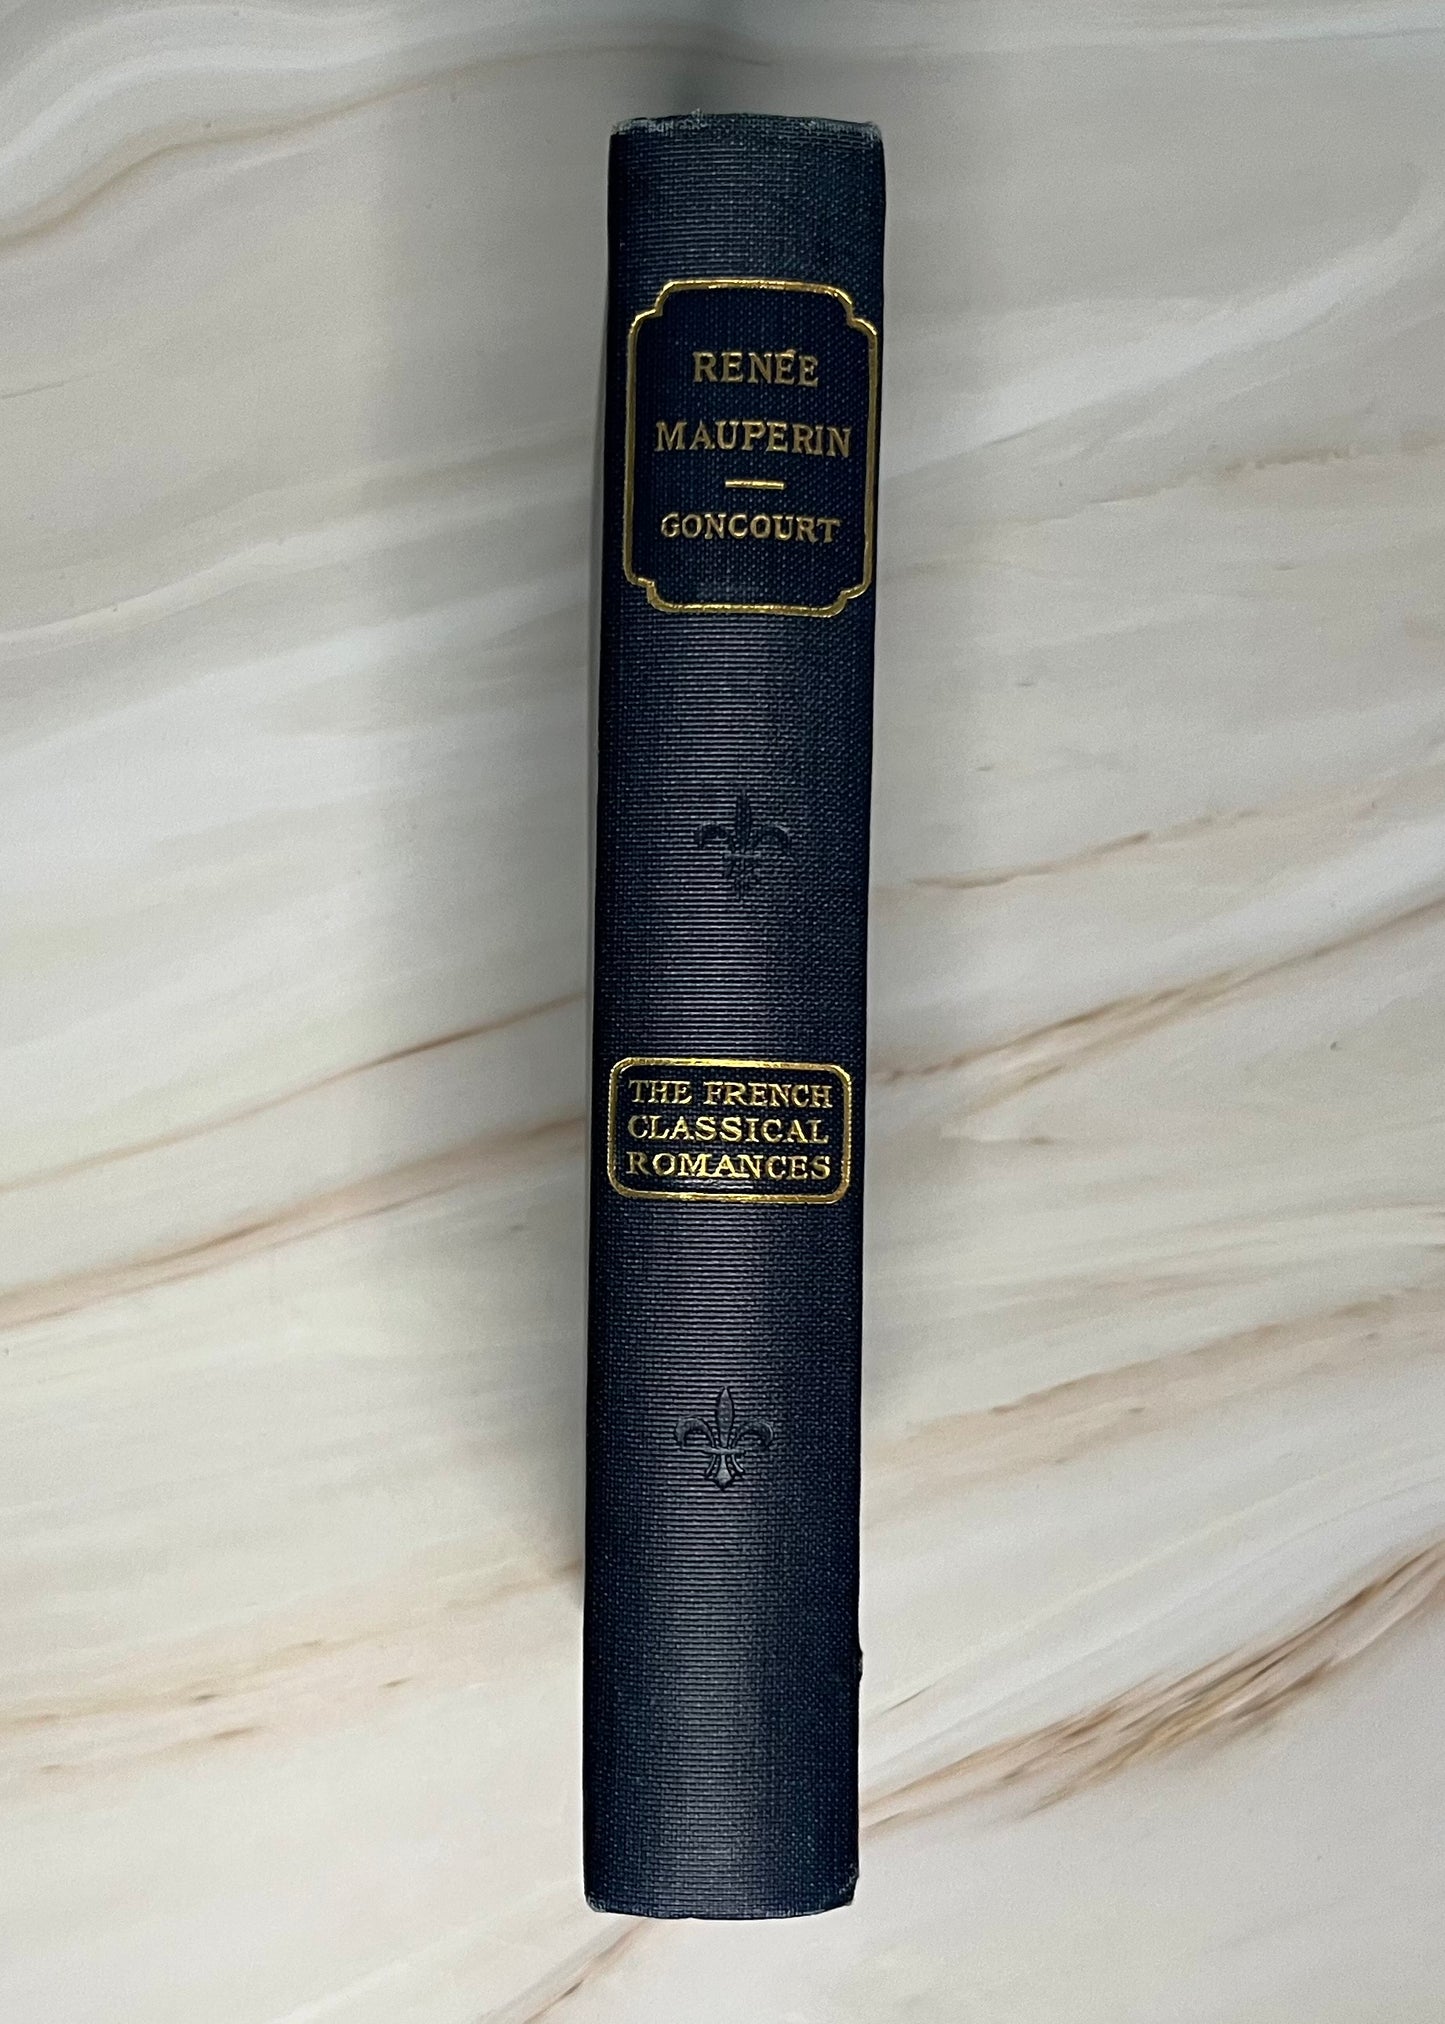 Timeless Elegance: Renée Mauperin by De Goncourt - Antique 1902 Edition - French Classical Romances Series - Blue Hardcover